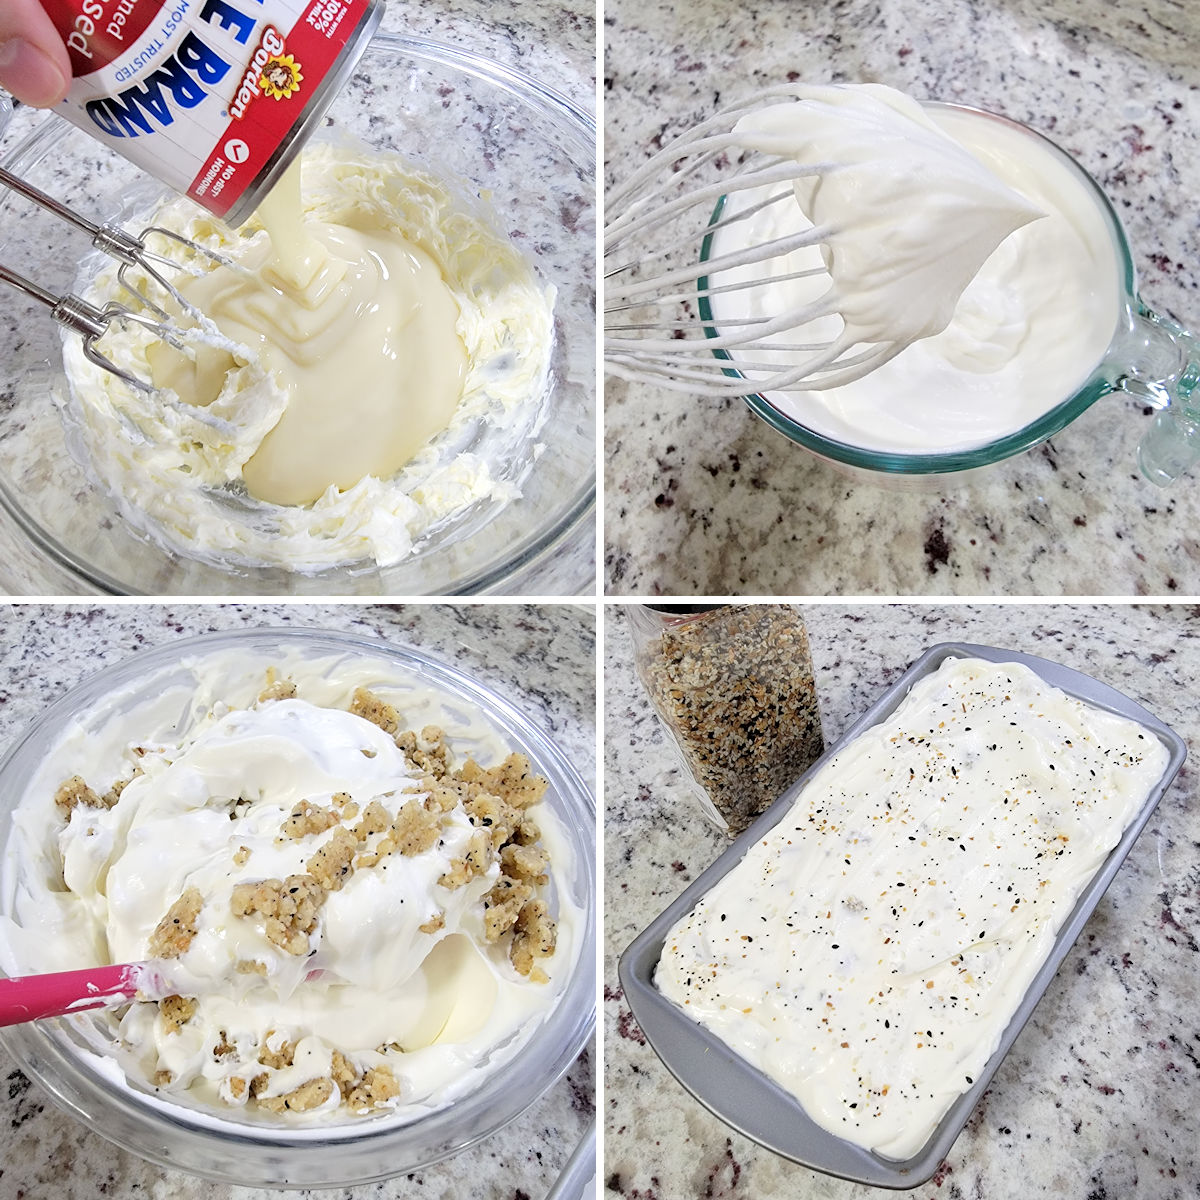 Mixing ingredients to make ice cream.